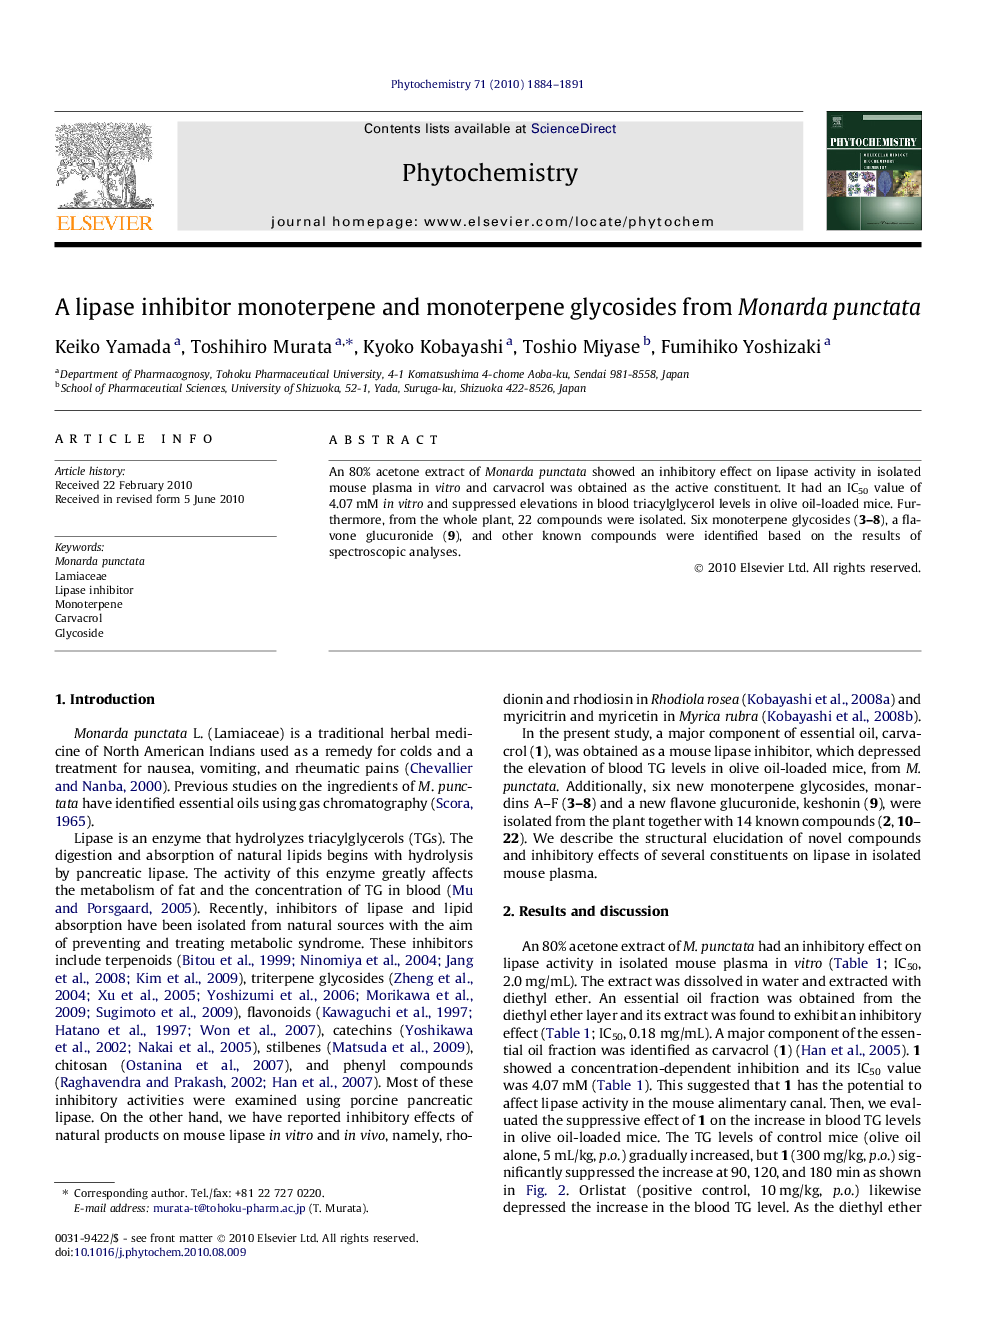 A lipase inhibitor monoterpene and monoterpene glycosides from Monarda punctata